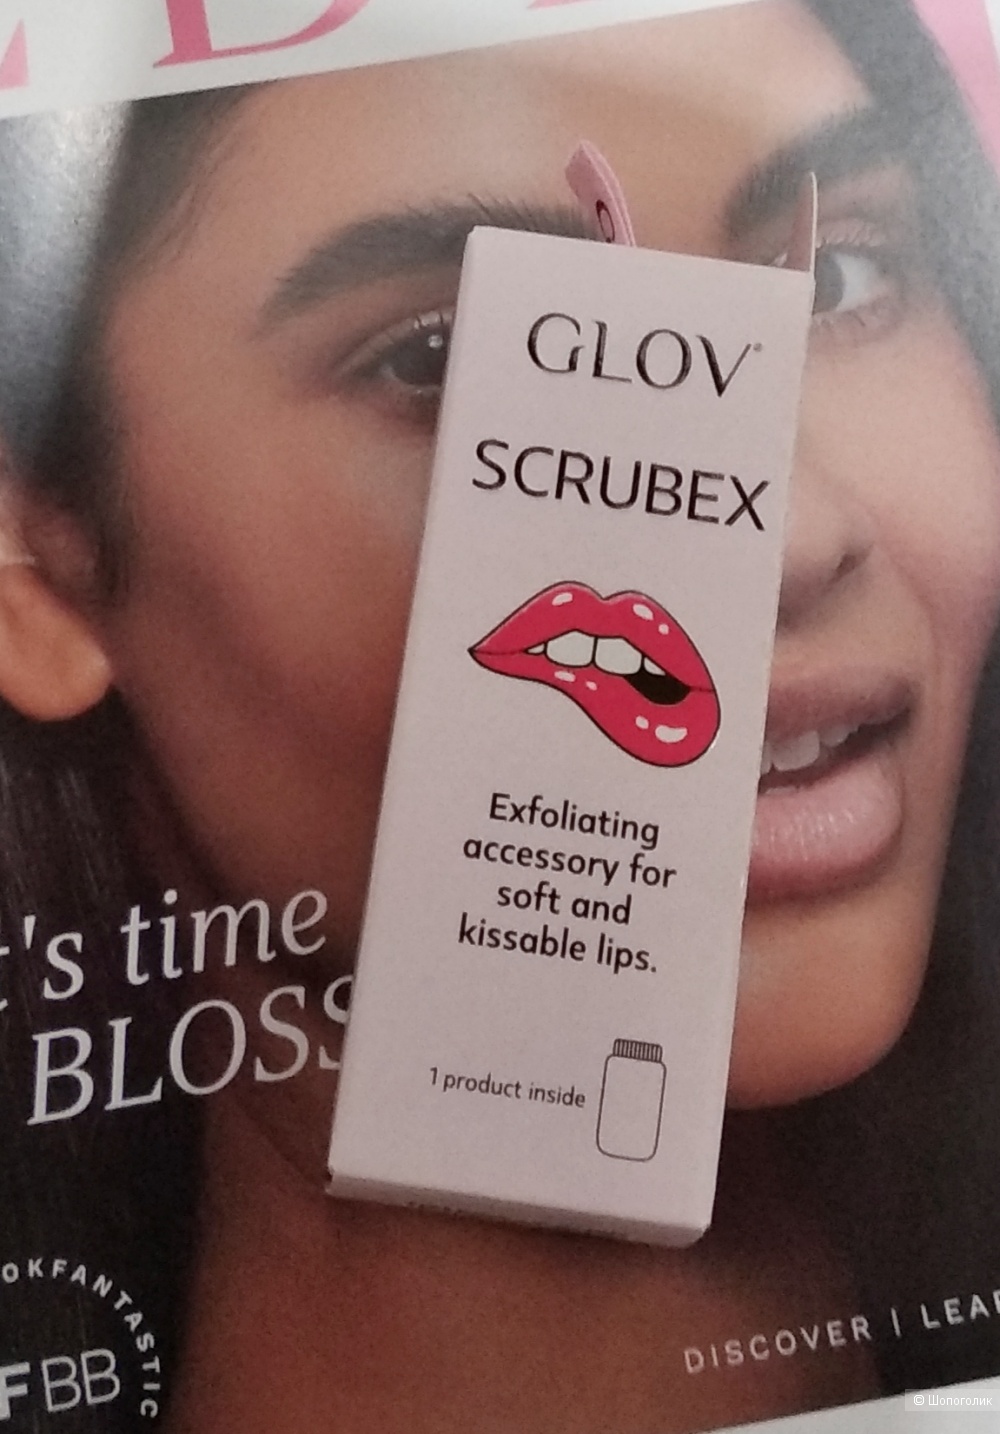 Бьюти-гаджет, скраб, для отшелушивания кожи губ, GLOV Scrubex